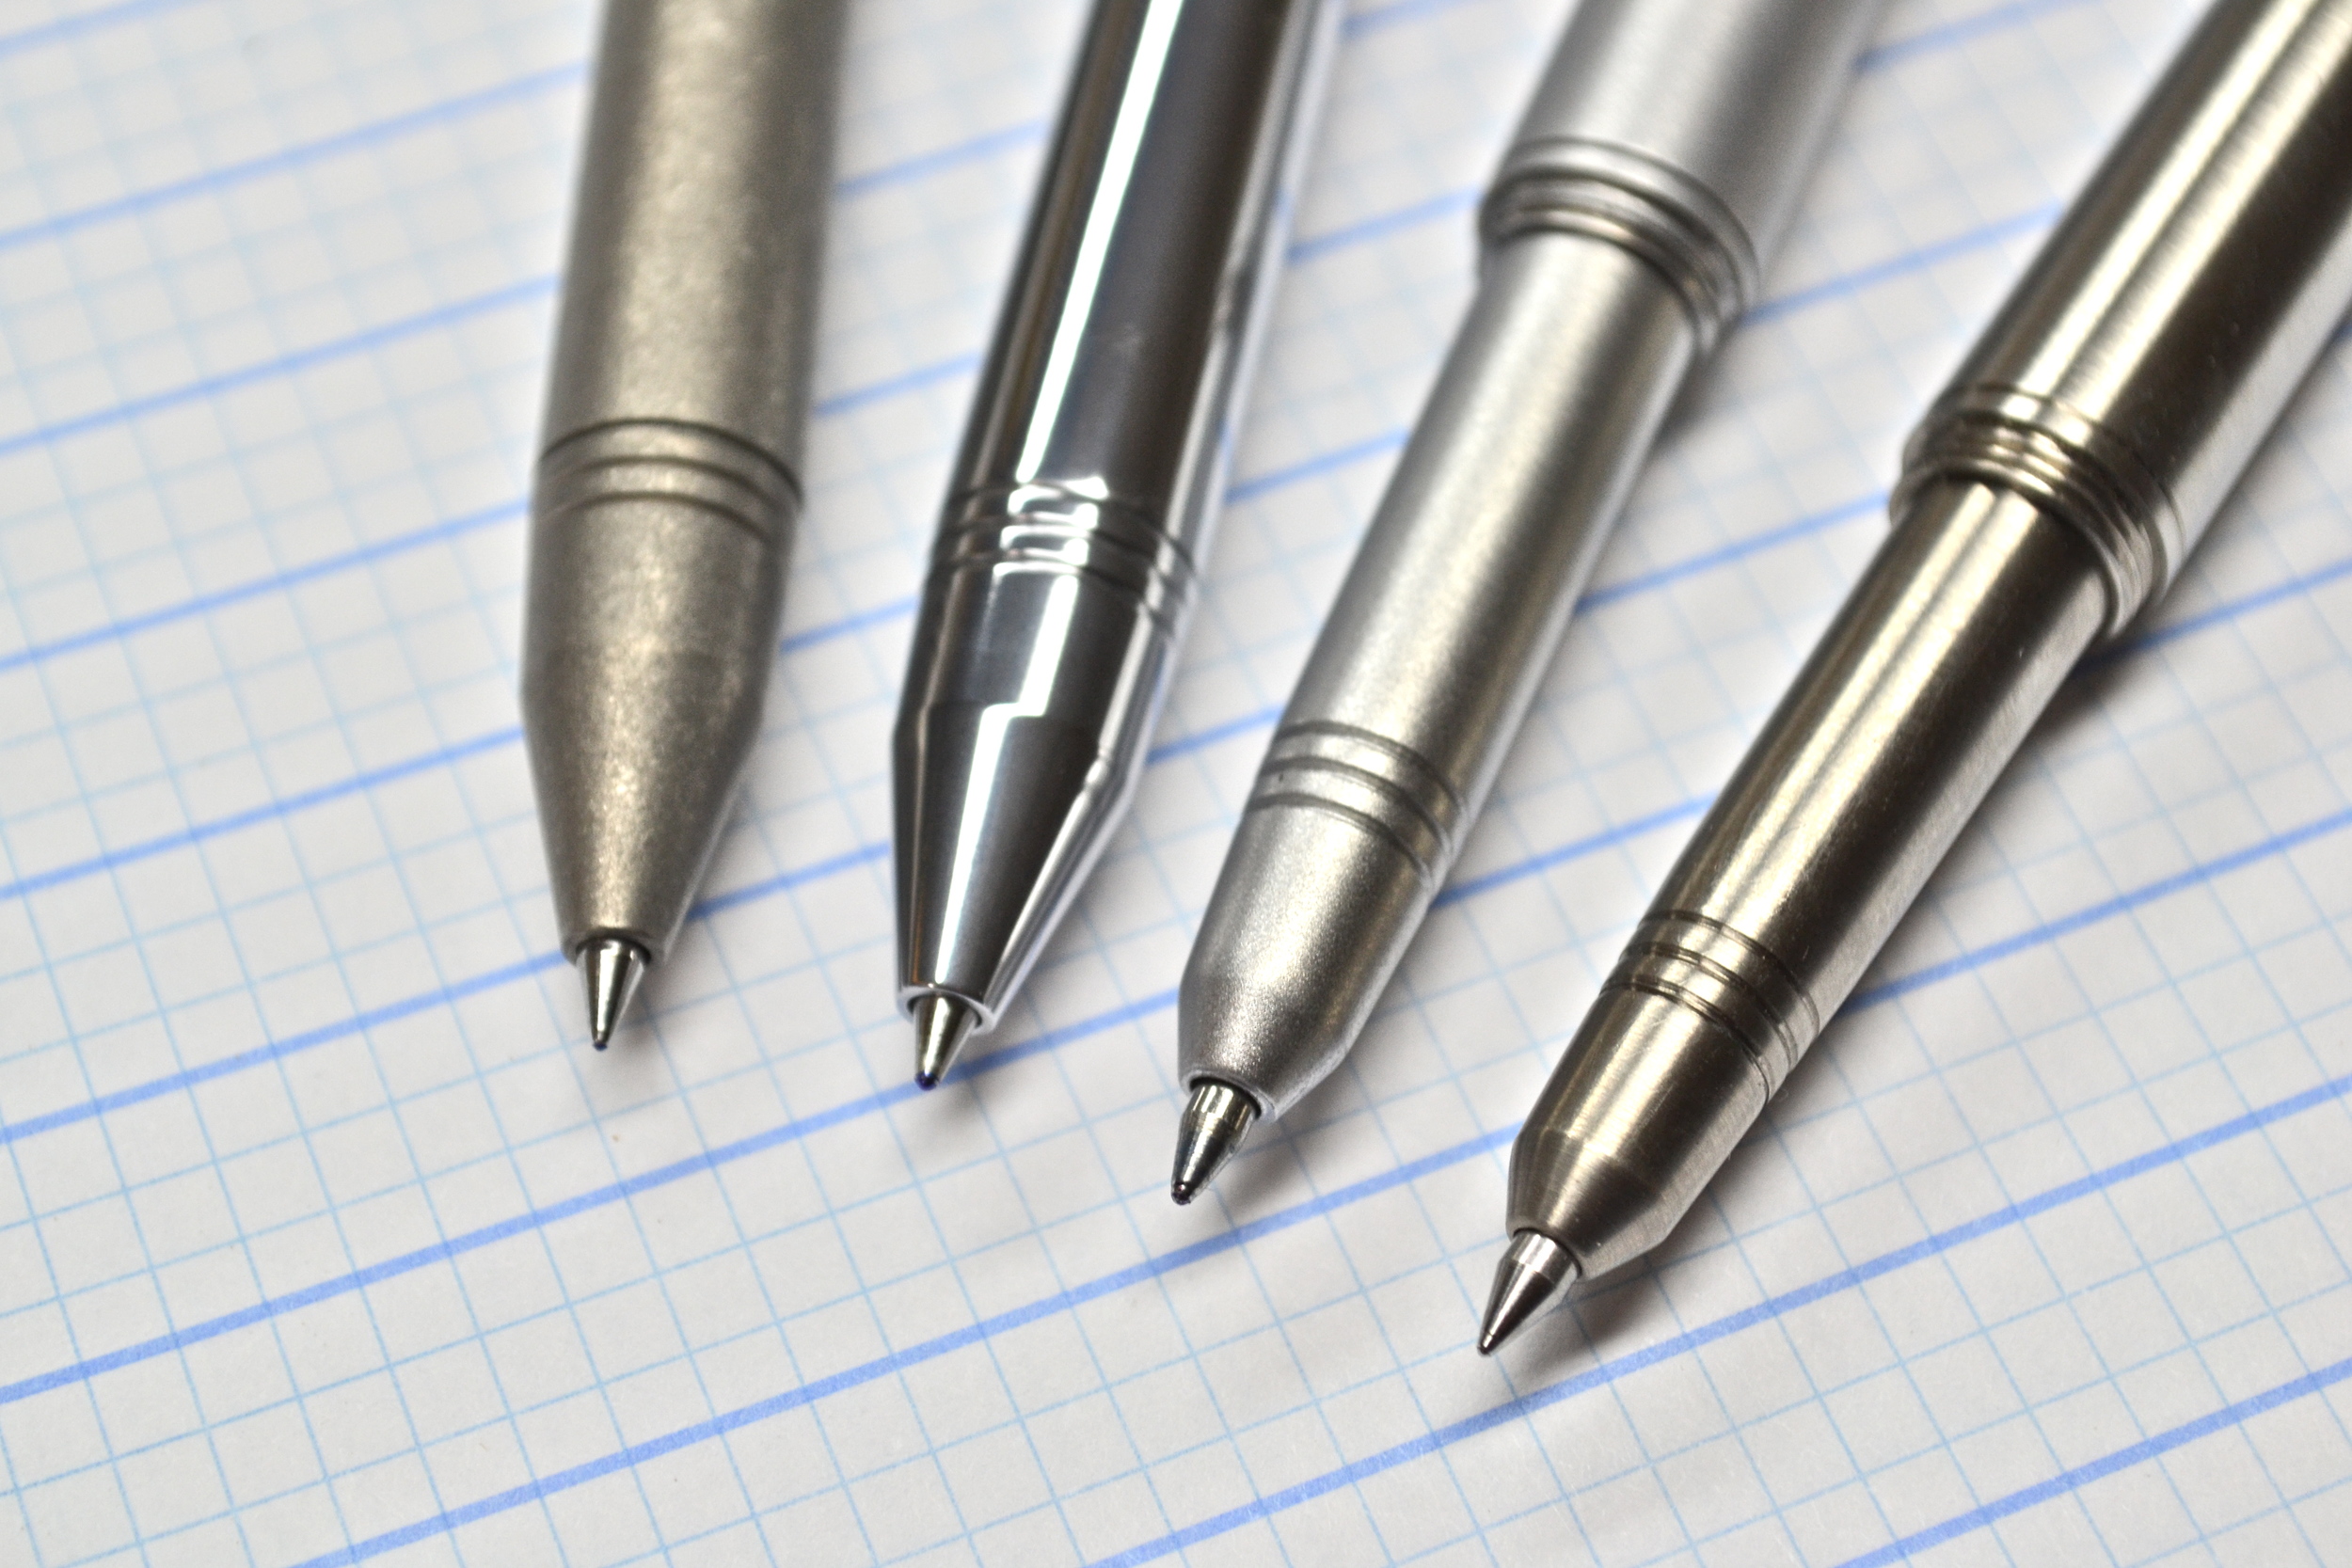 Big Idea Design - XTS Raw Titanium Pen + Stylus Review - My Pen Needs InkMy  Pen Needs Ink